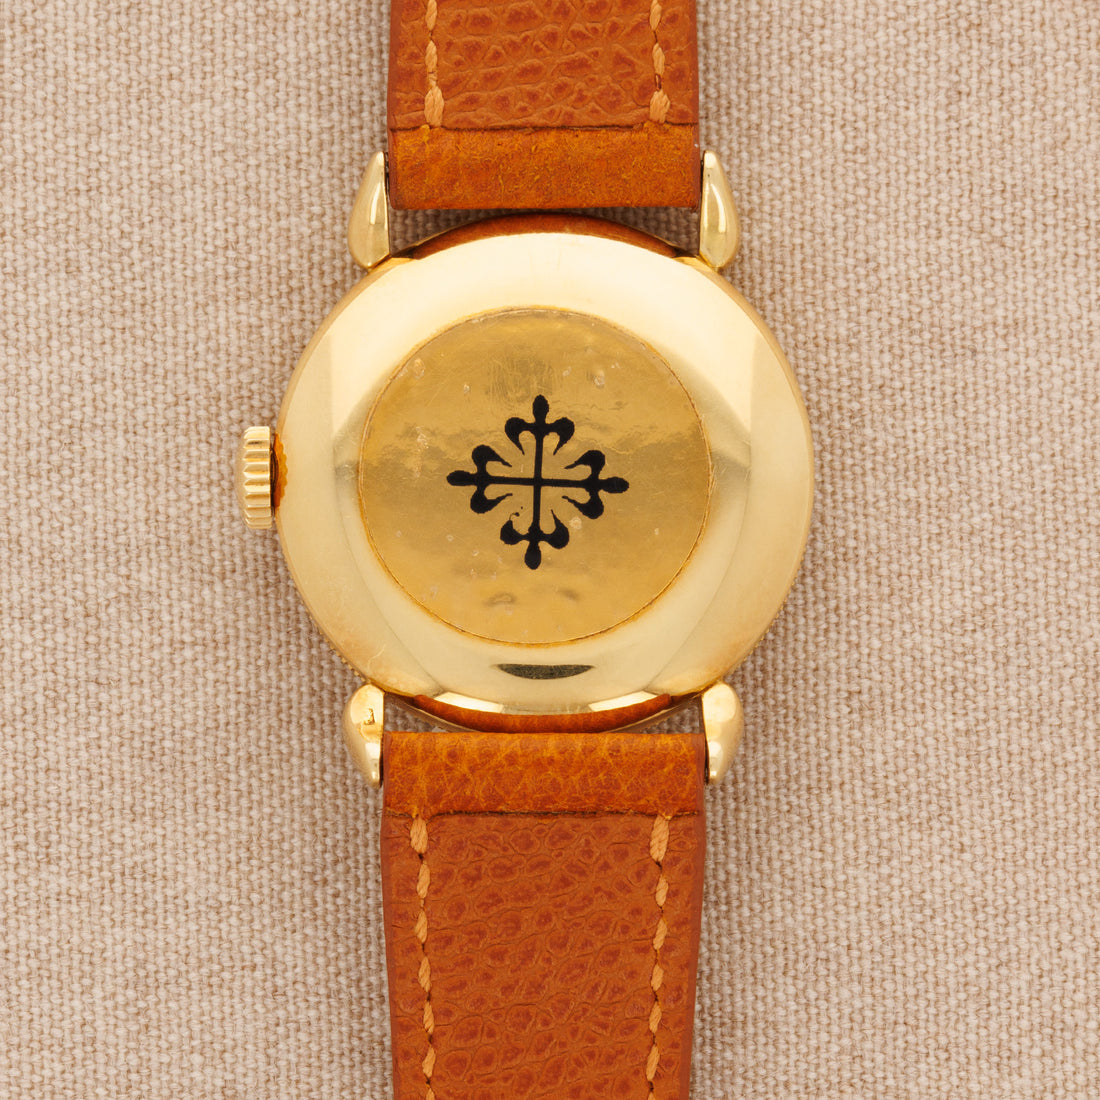 Patek Philippe Yellow Gold World Time Watch Ref. 1415